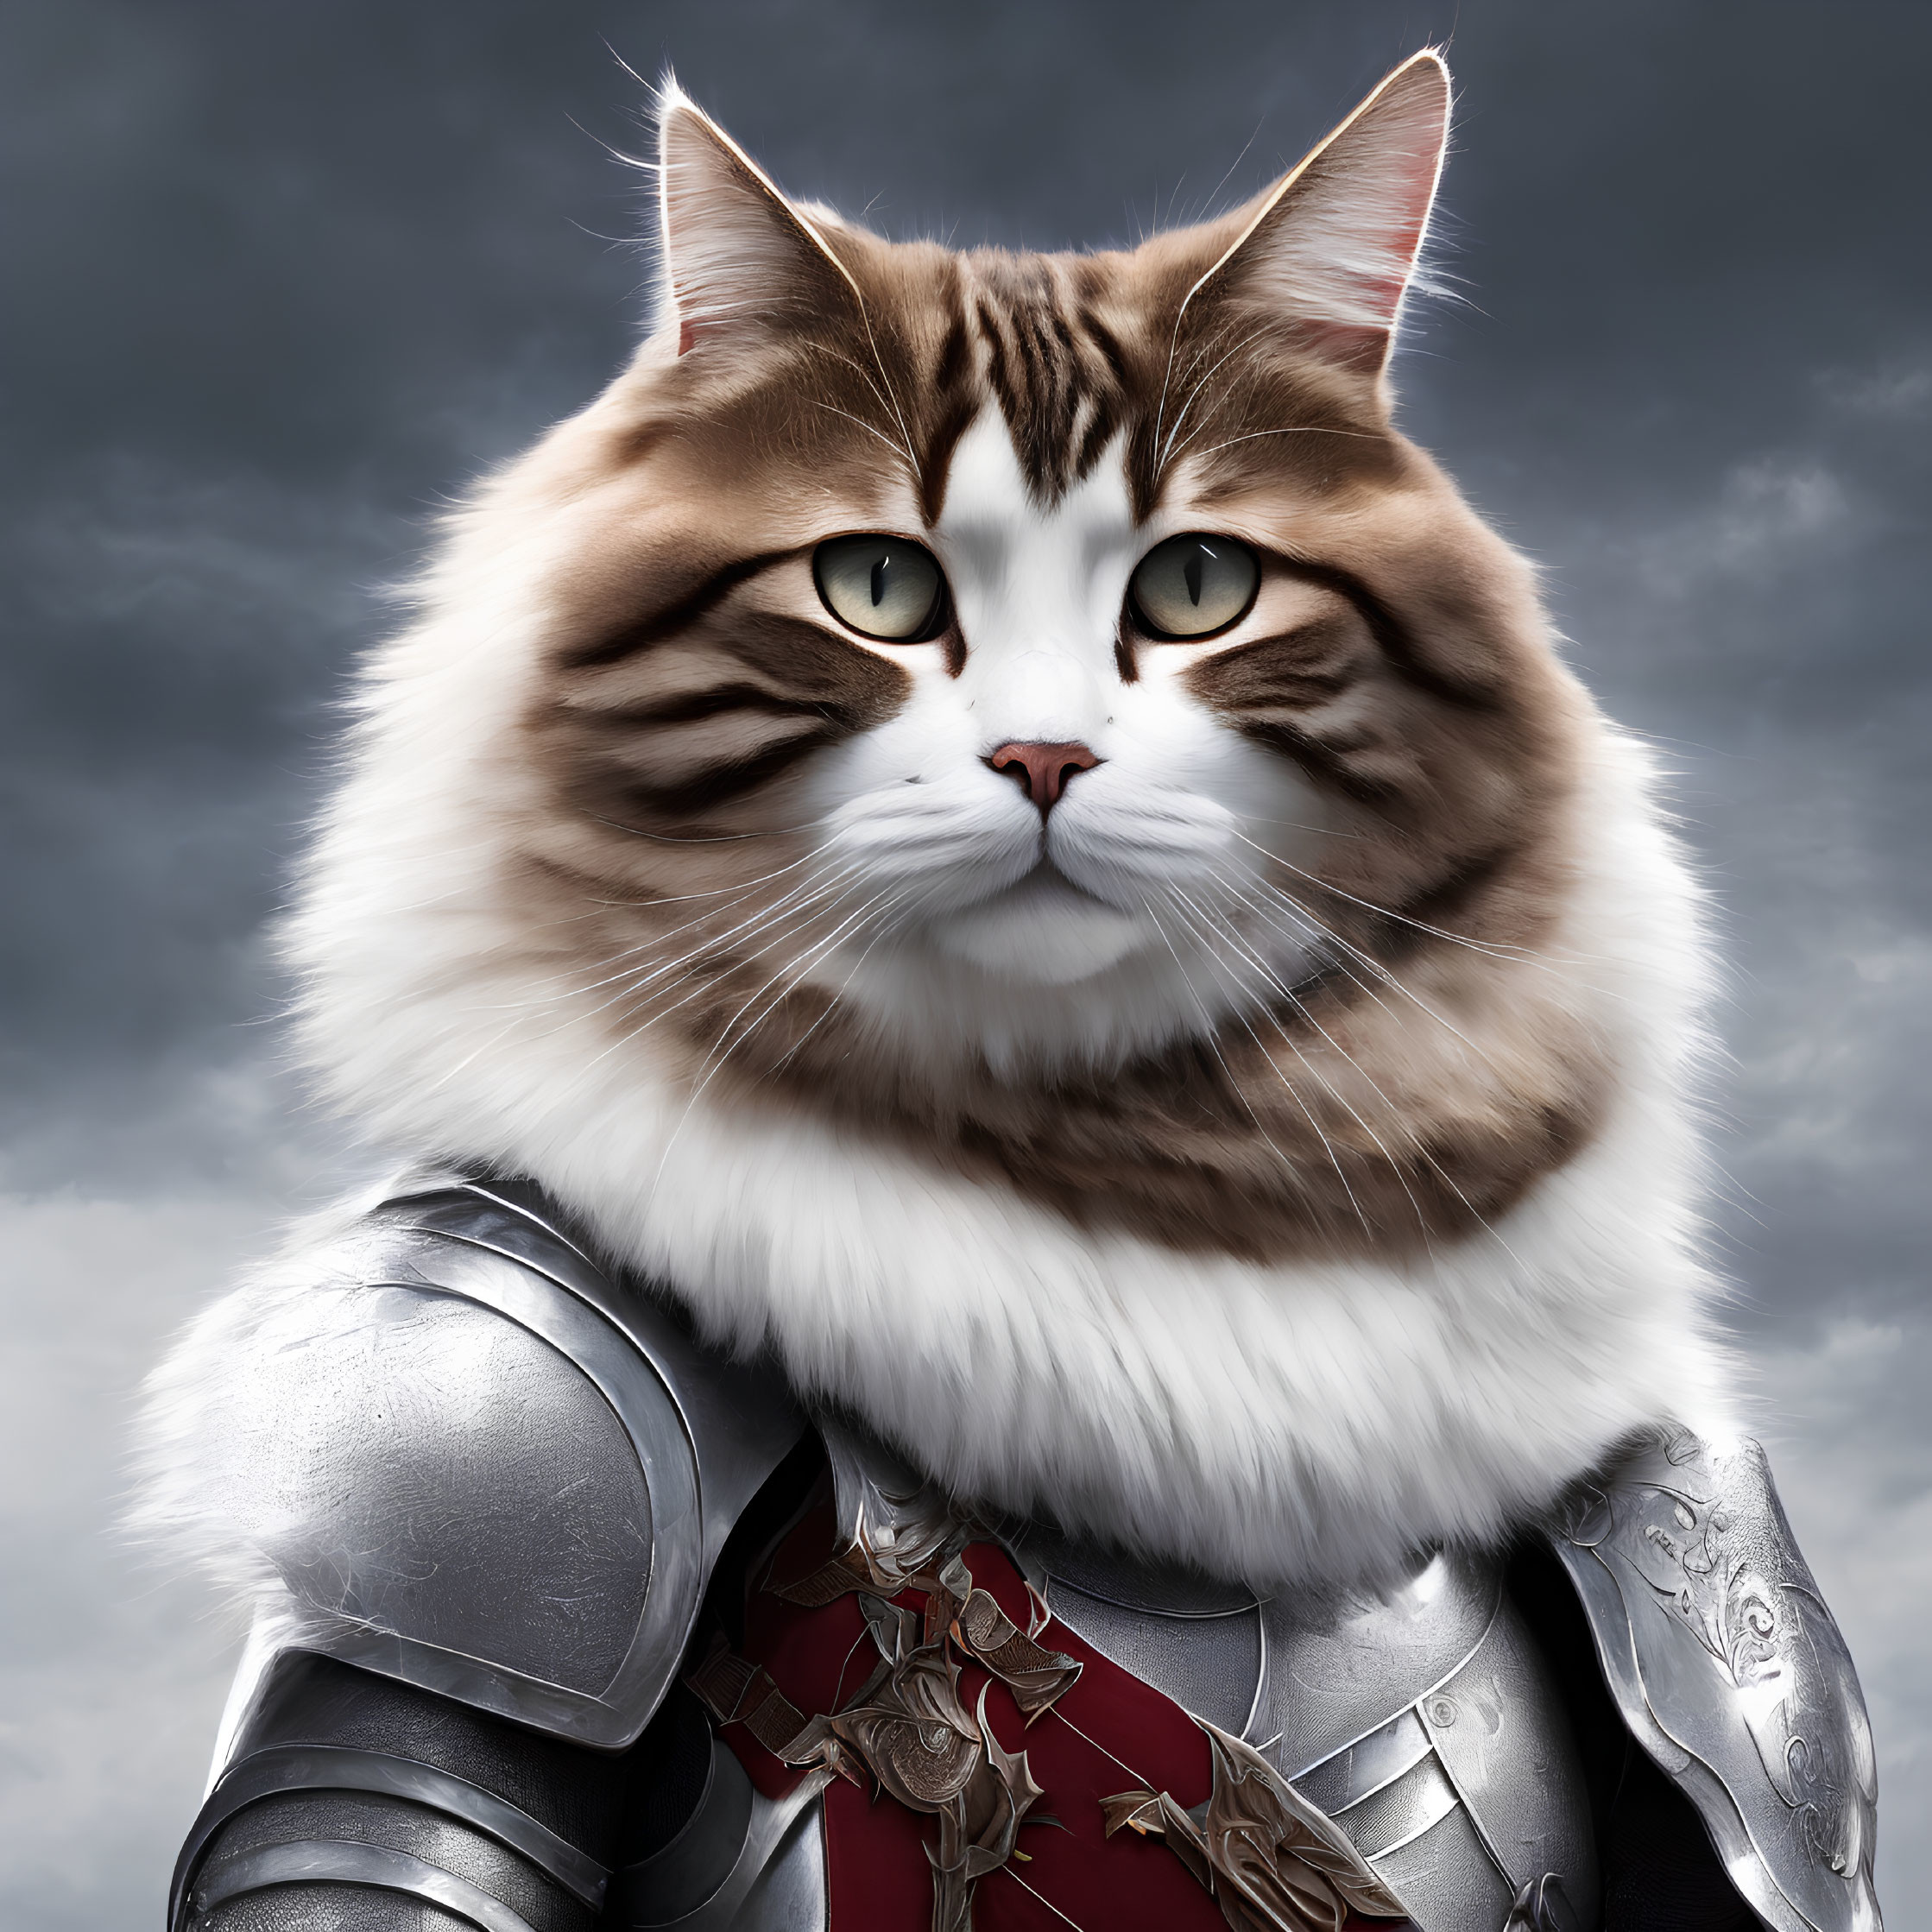 Regal cat in knight armor under stormy sky